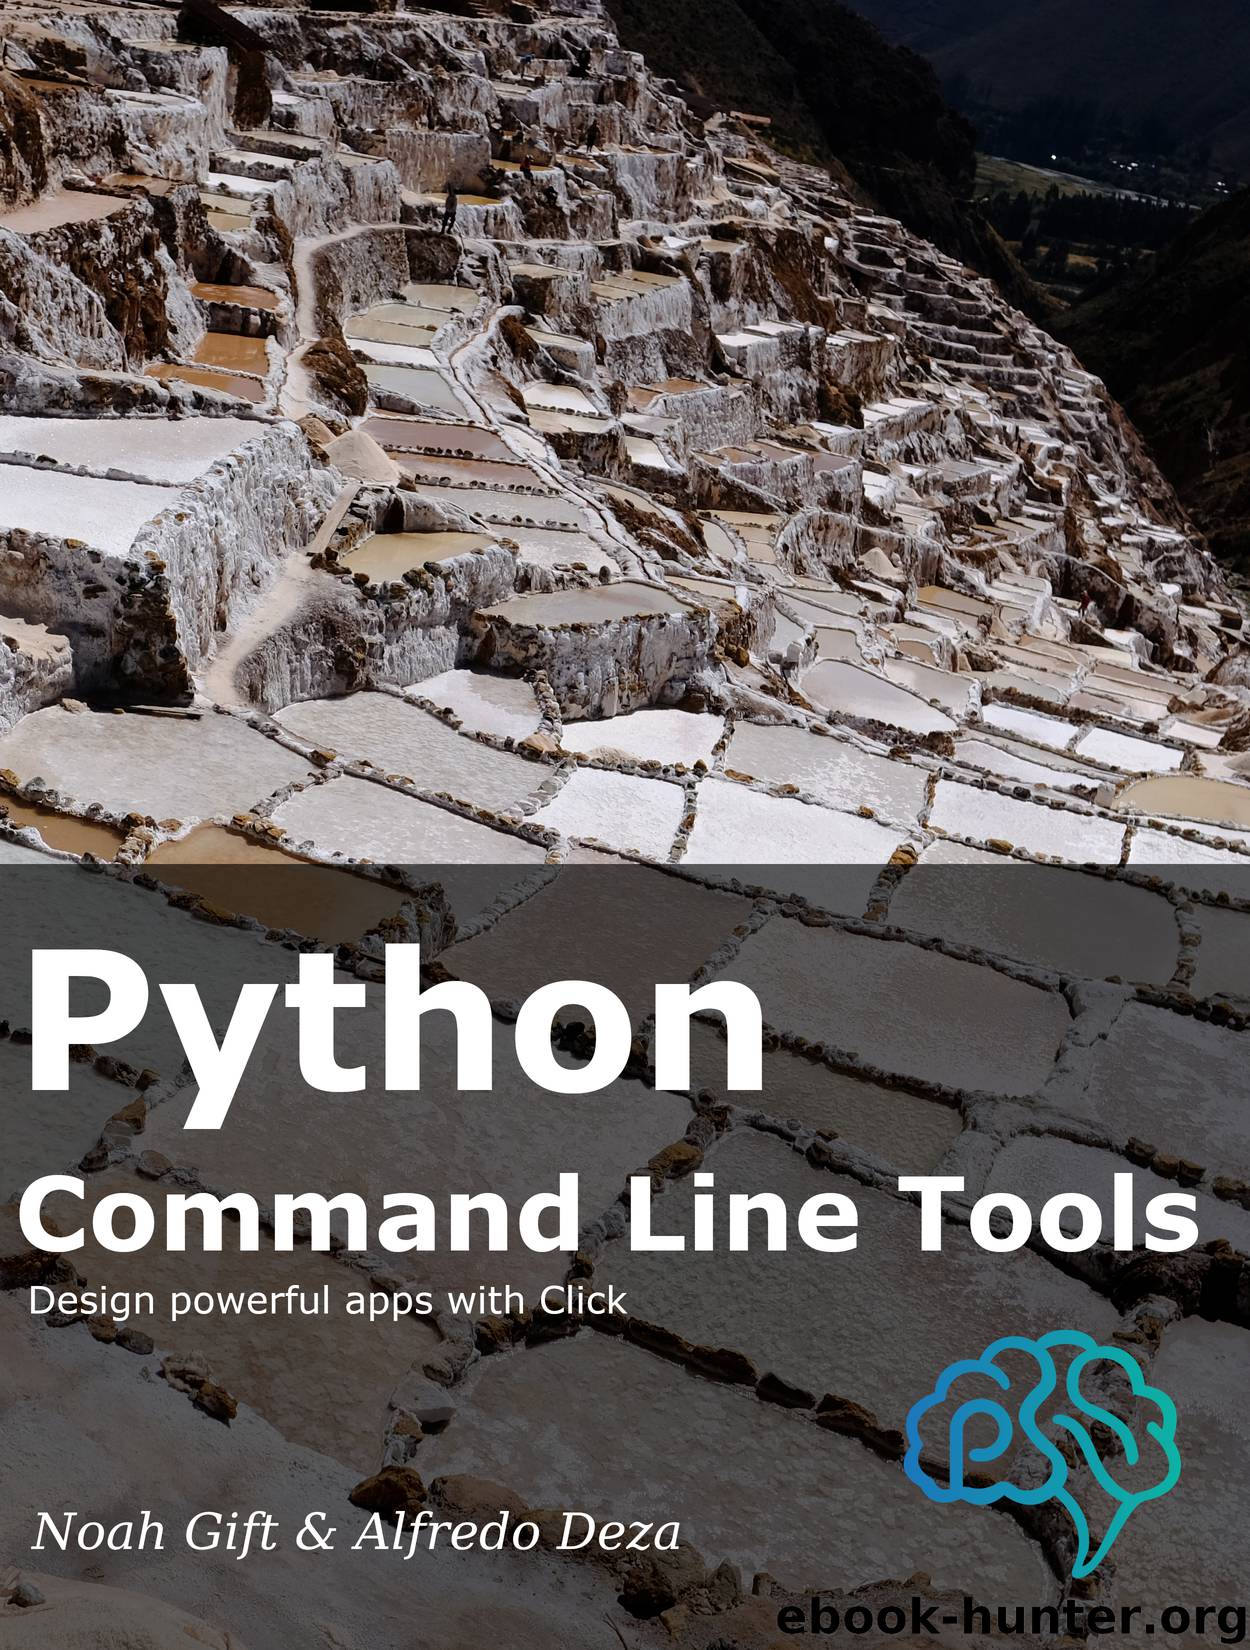 Python Command Line Tools by Noah Gift & Alfredo Deza